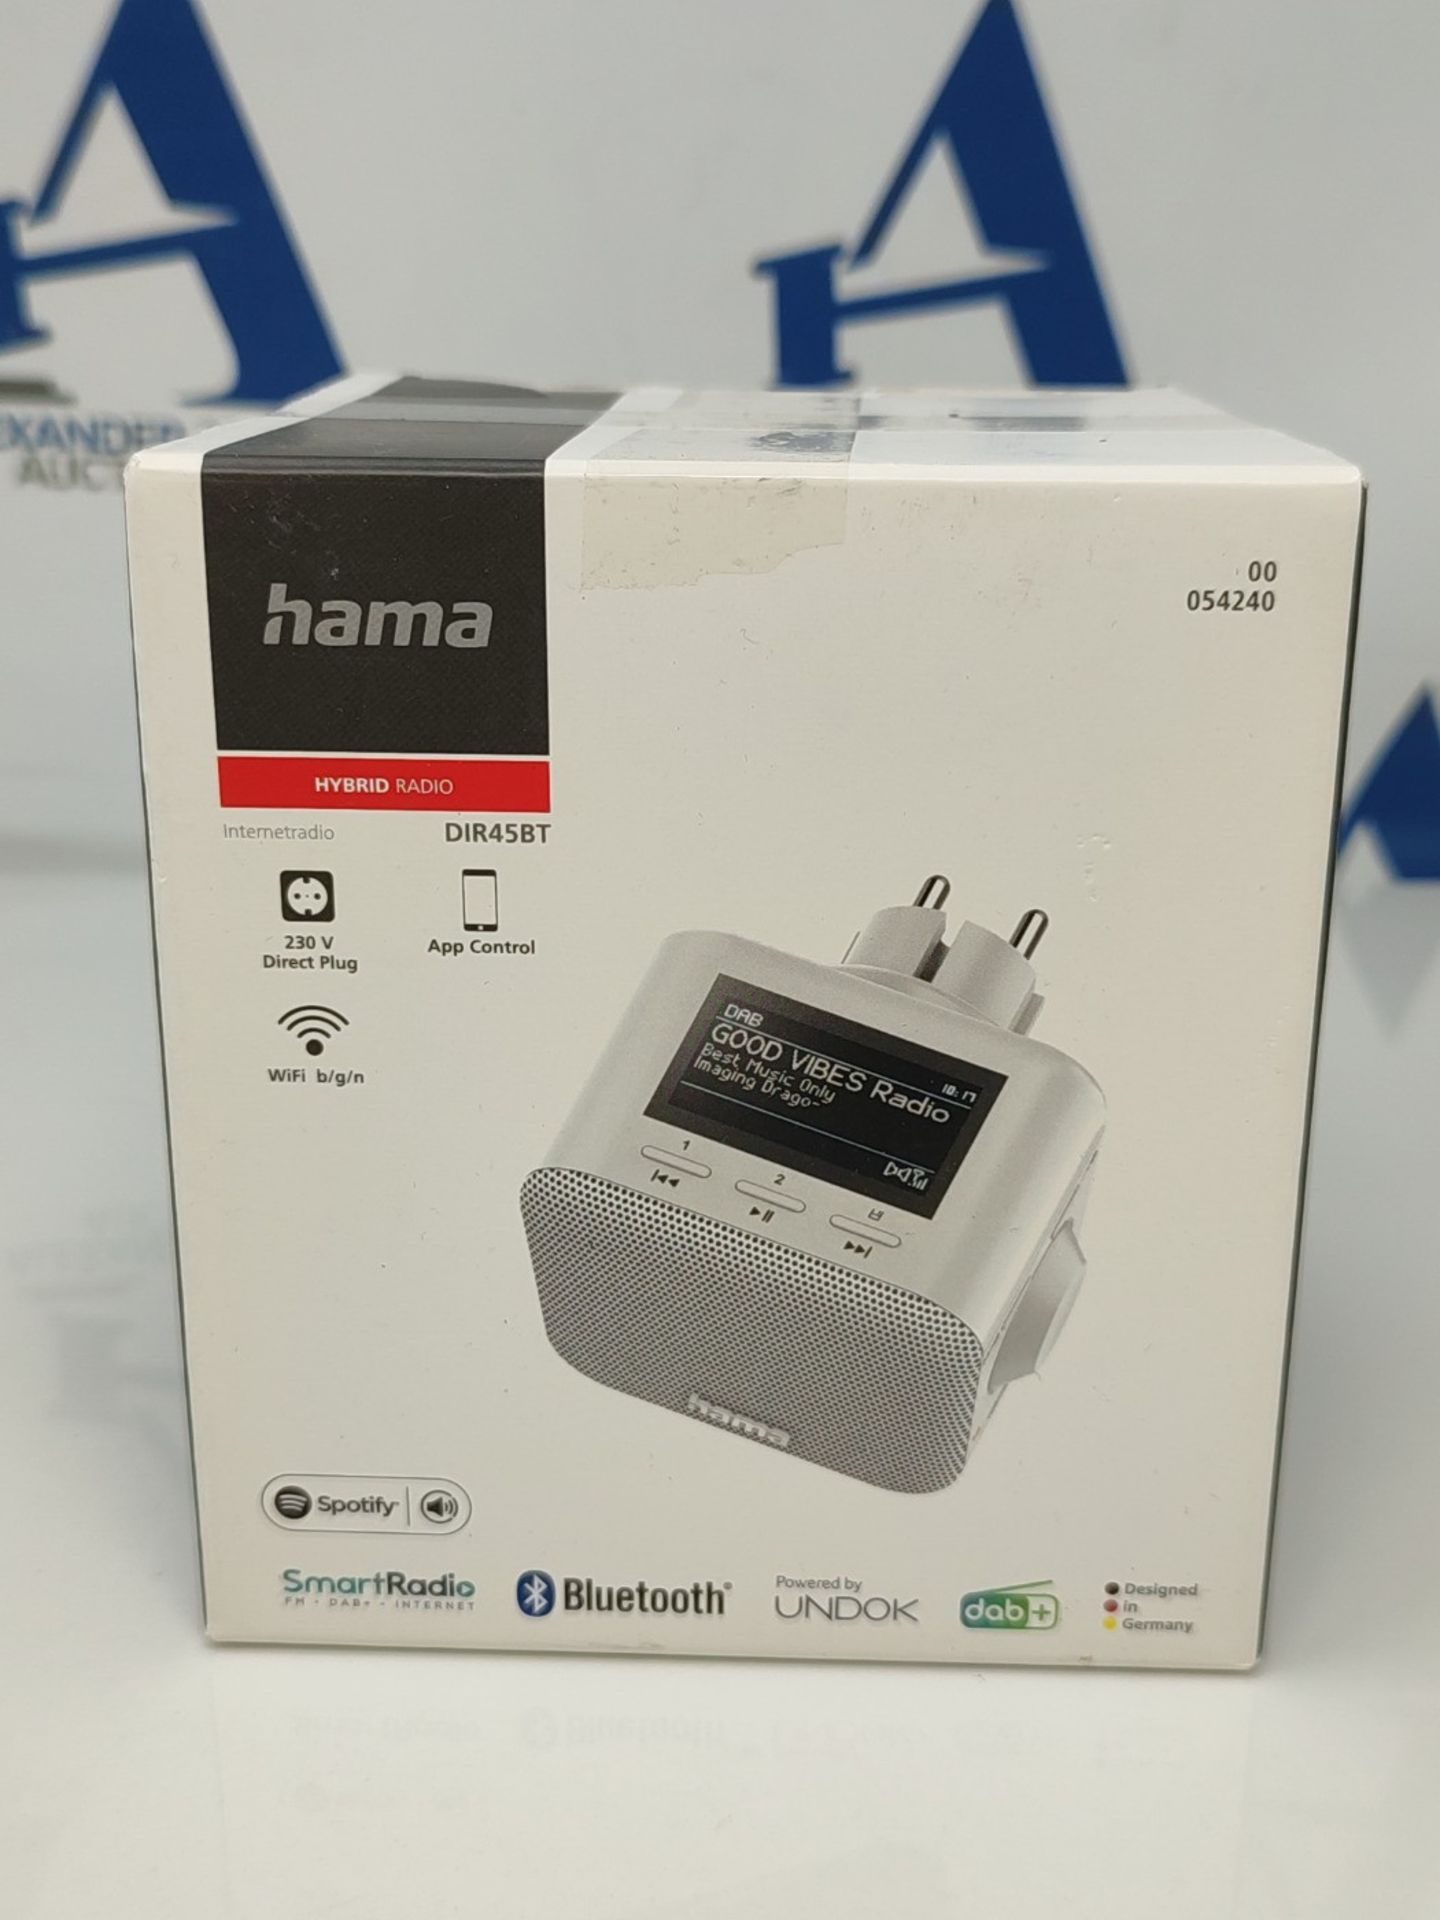 RRP £110.00 Hama Socket Radio DAB Radio DIR45BT Internet Radio DAB+, Bluetooth & Spotify (WiFi kit - Image 2 of 3